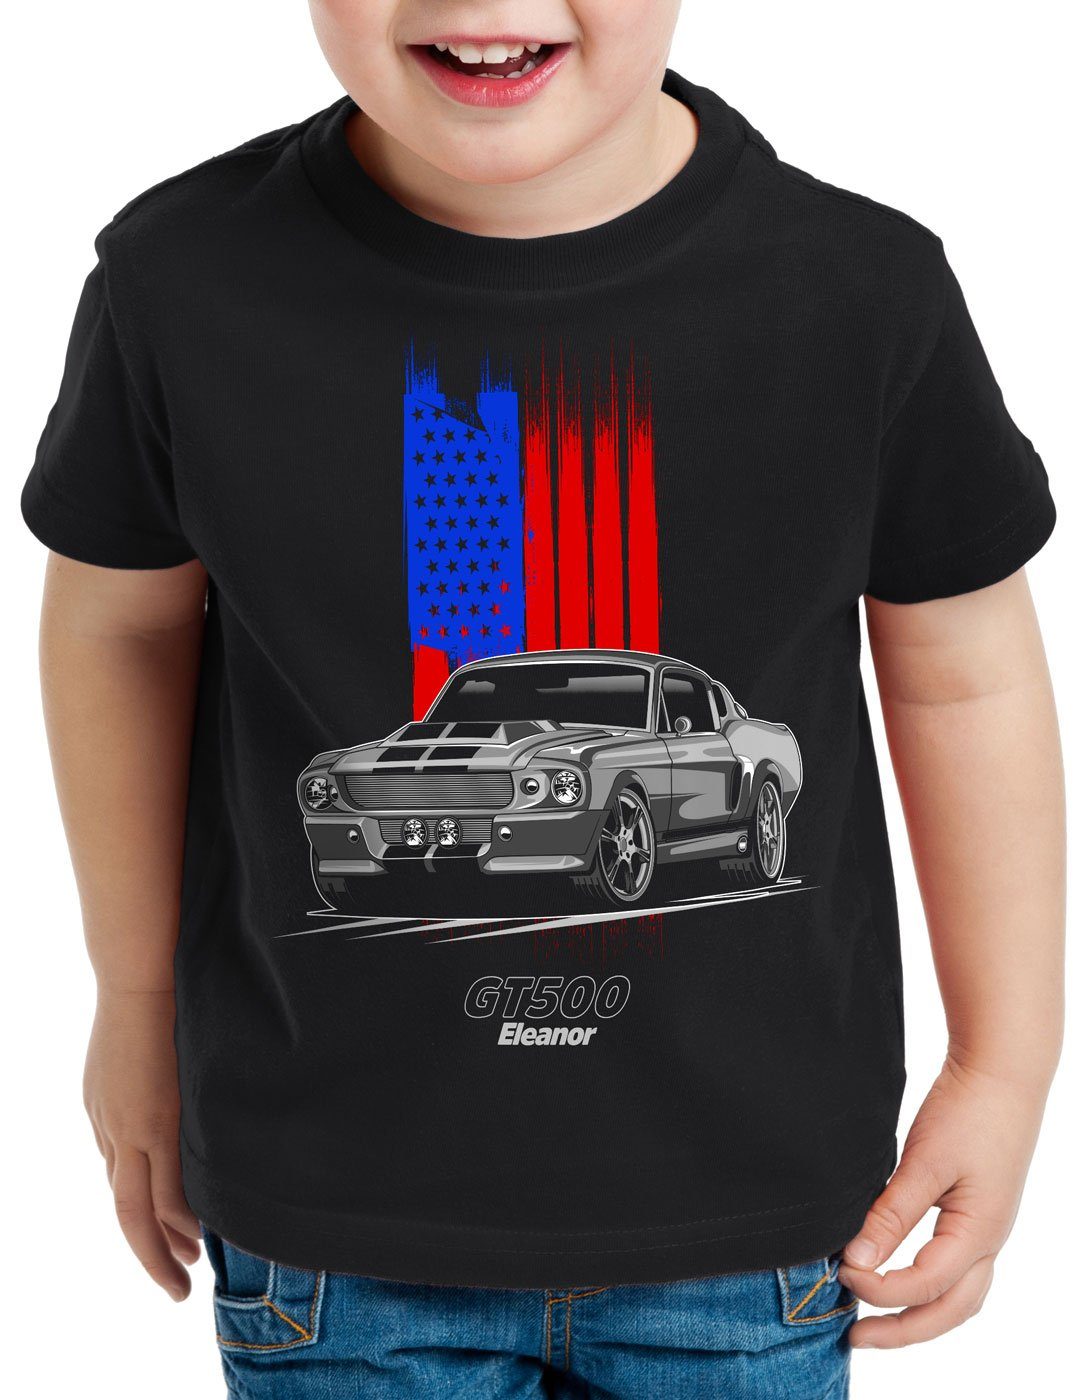 T-Shirt GT500 stripes Eleanor Print-Shirt usa and stars style3 Kinder